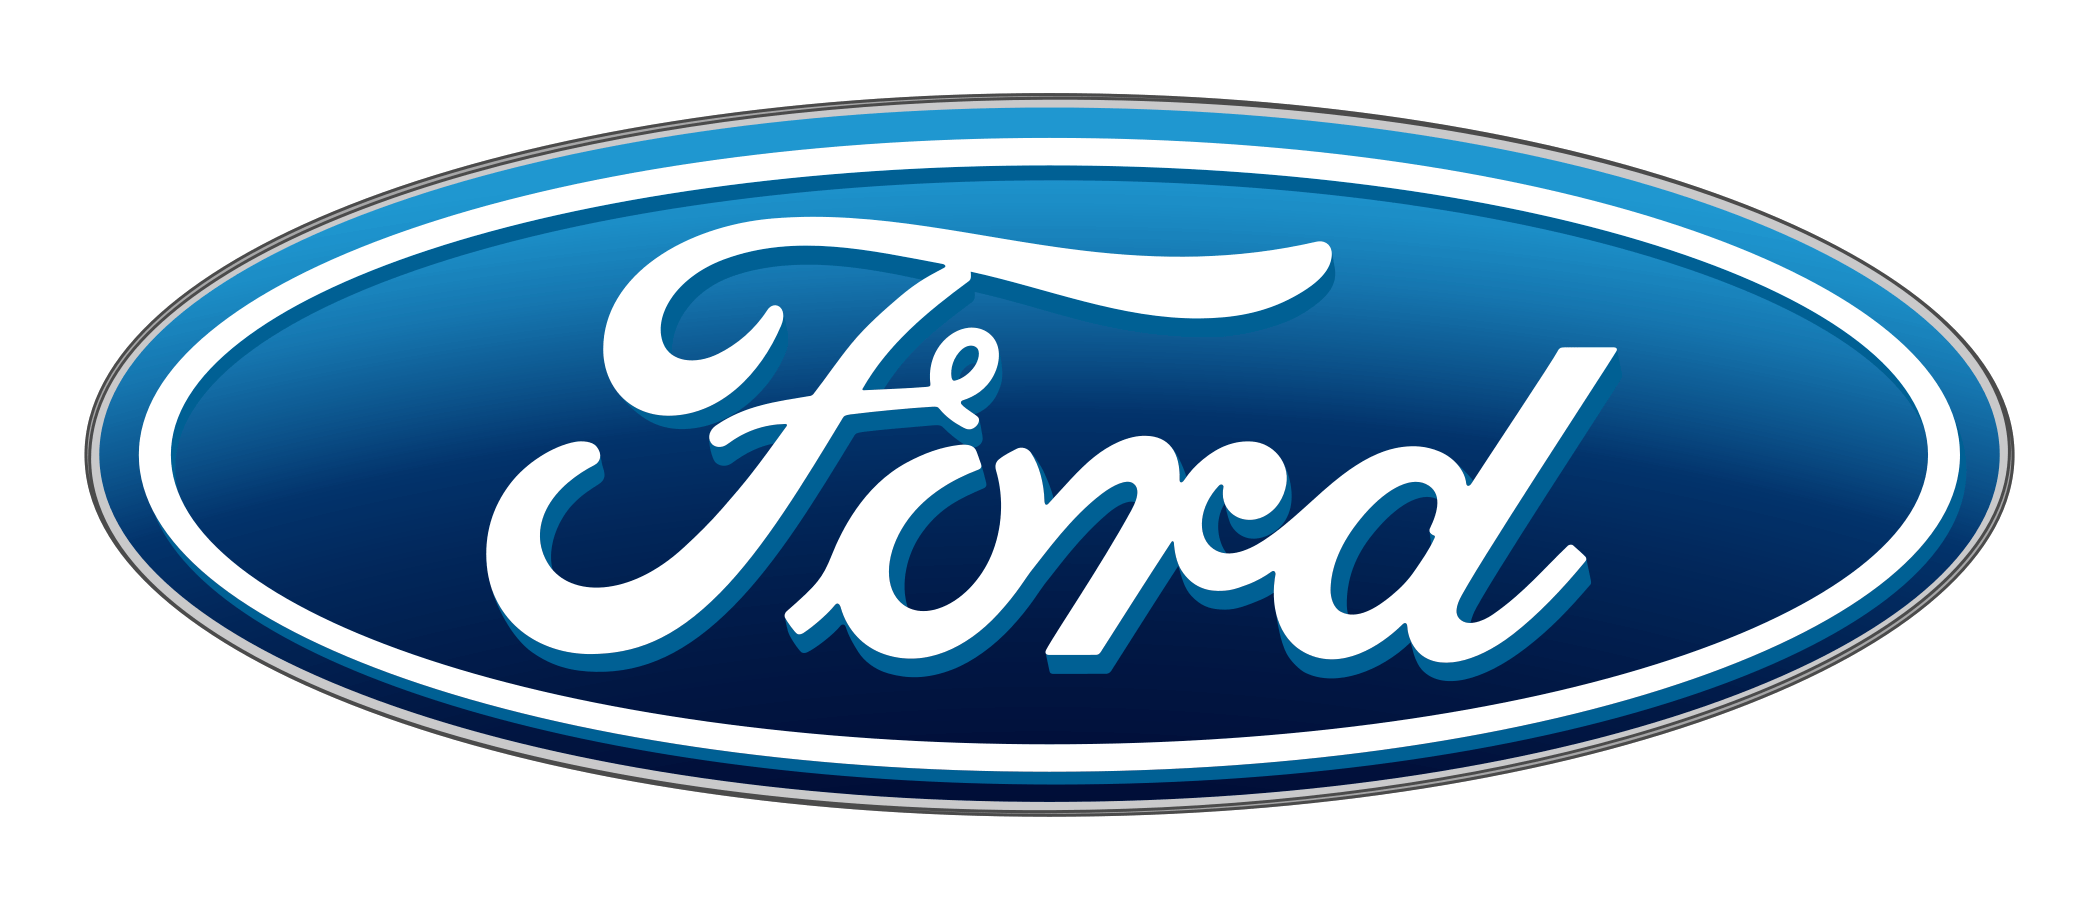 2018 Ford Logo - Ford Motor Logo PNG Transparent | PNG Transparent best stock photos